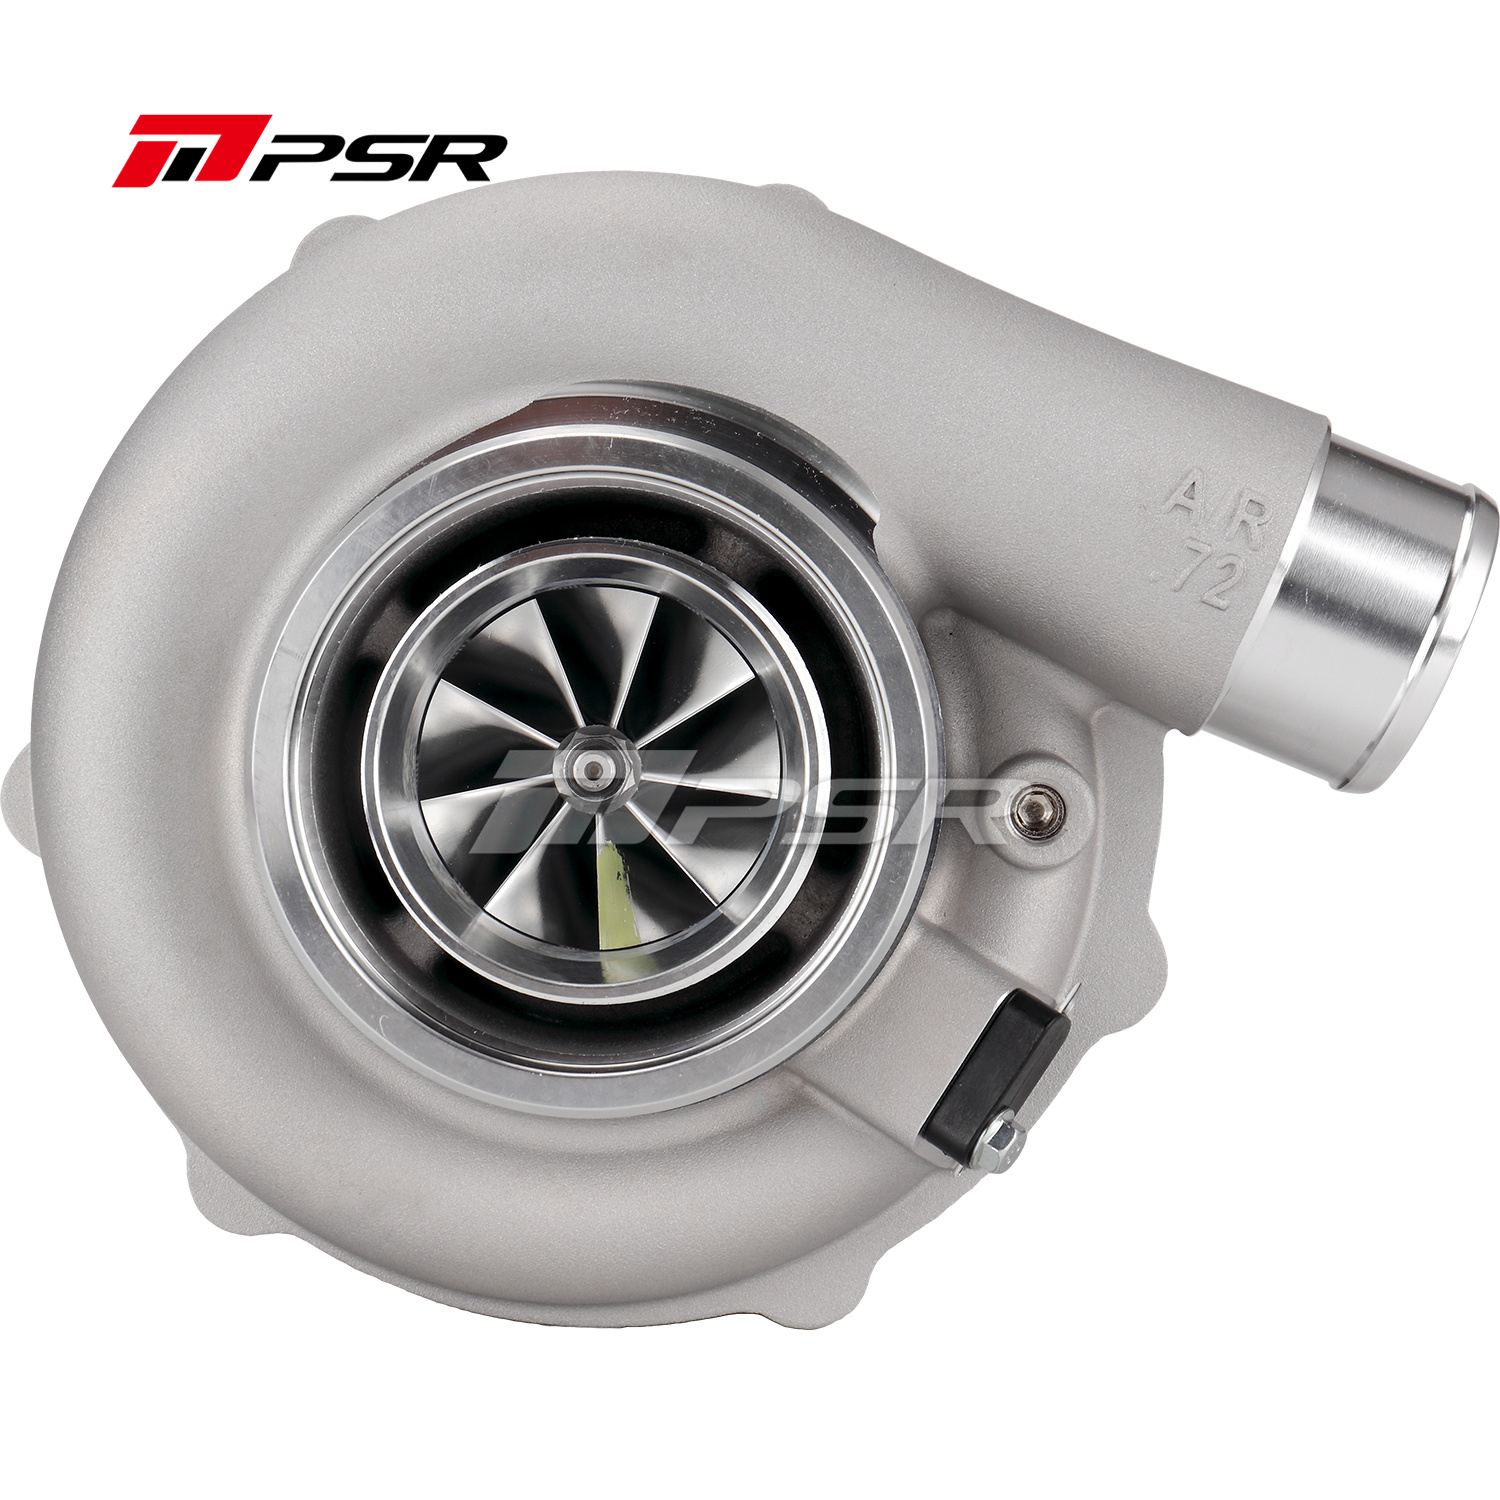 PULSAR G30-770 Dual Ball Bearing Turbo Forward rotation, T3, 0.72A/R  102152625